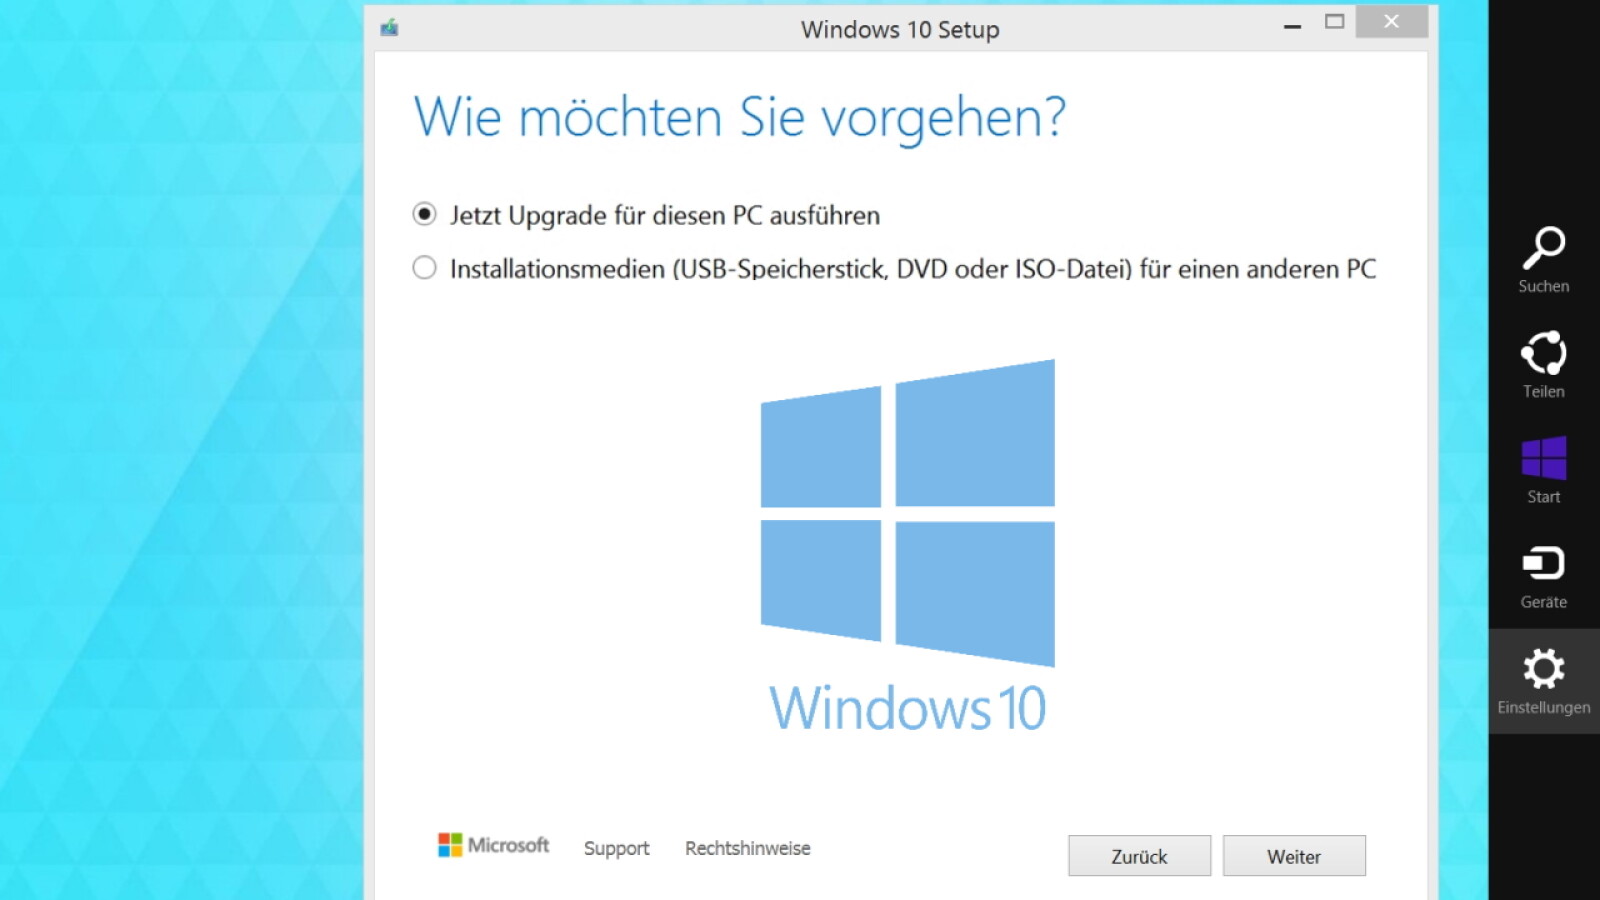 update windows 8 to windows 10